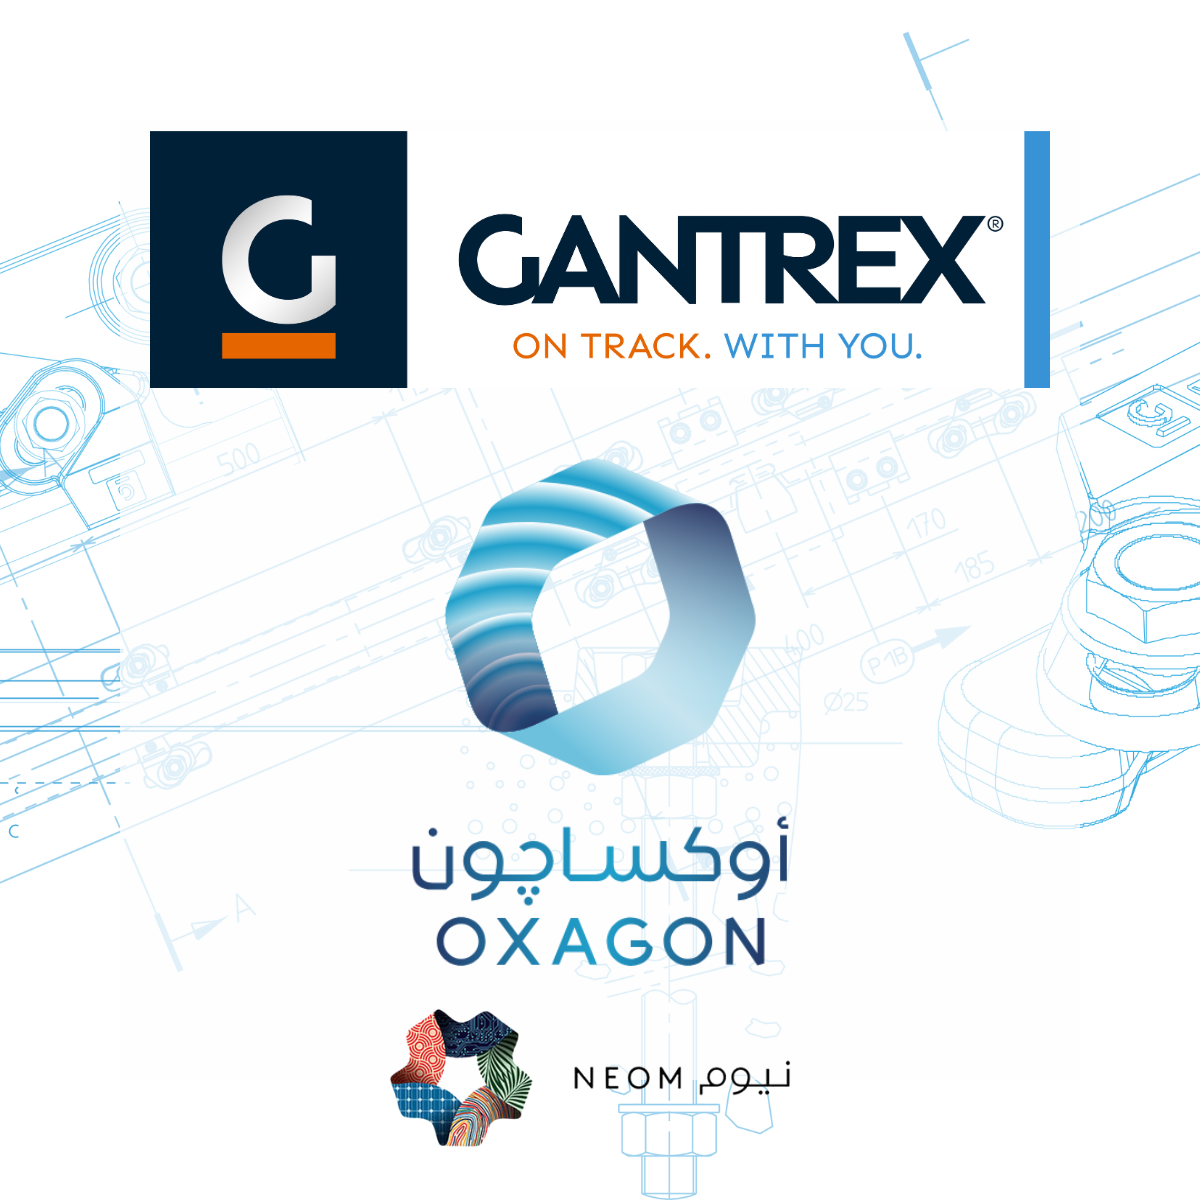 Gantrex - NEOM Project - Oxagon